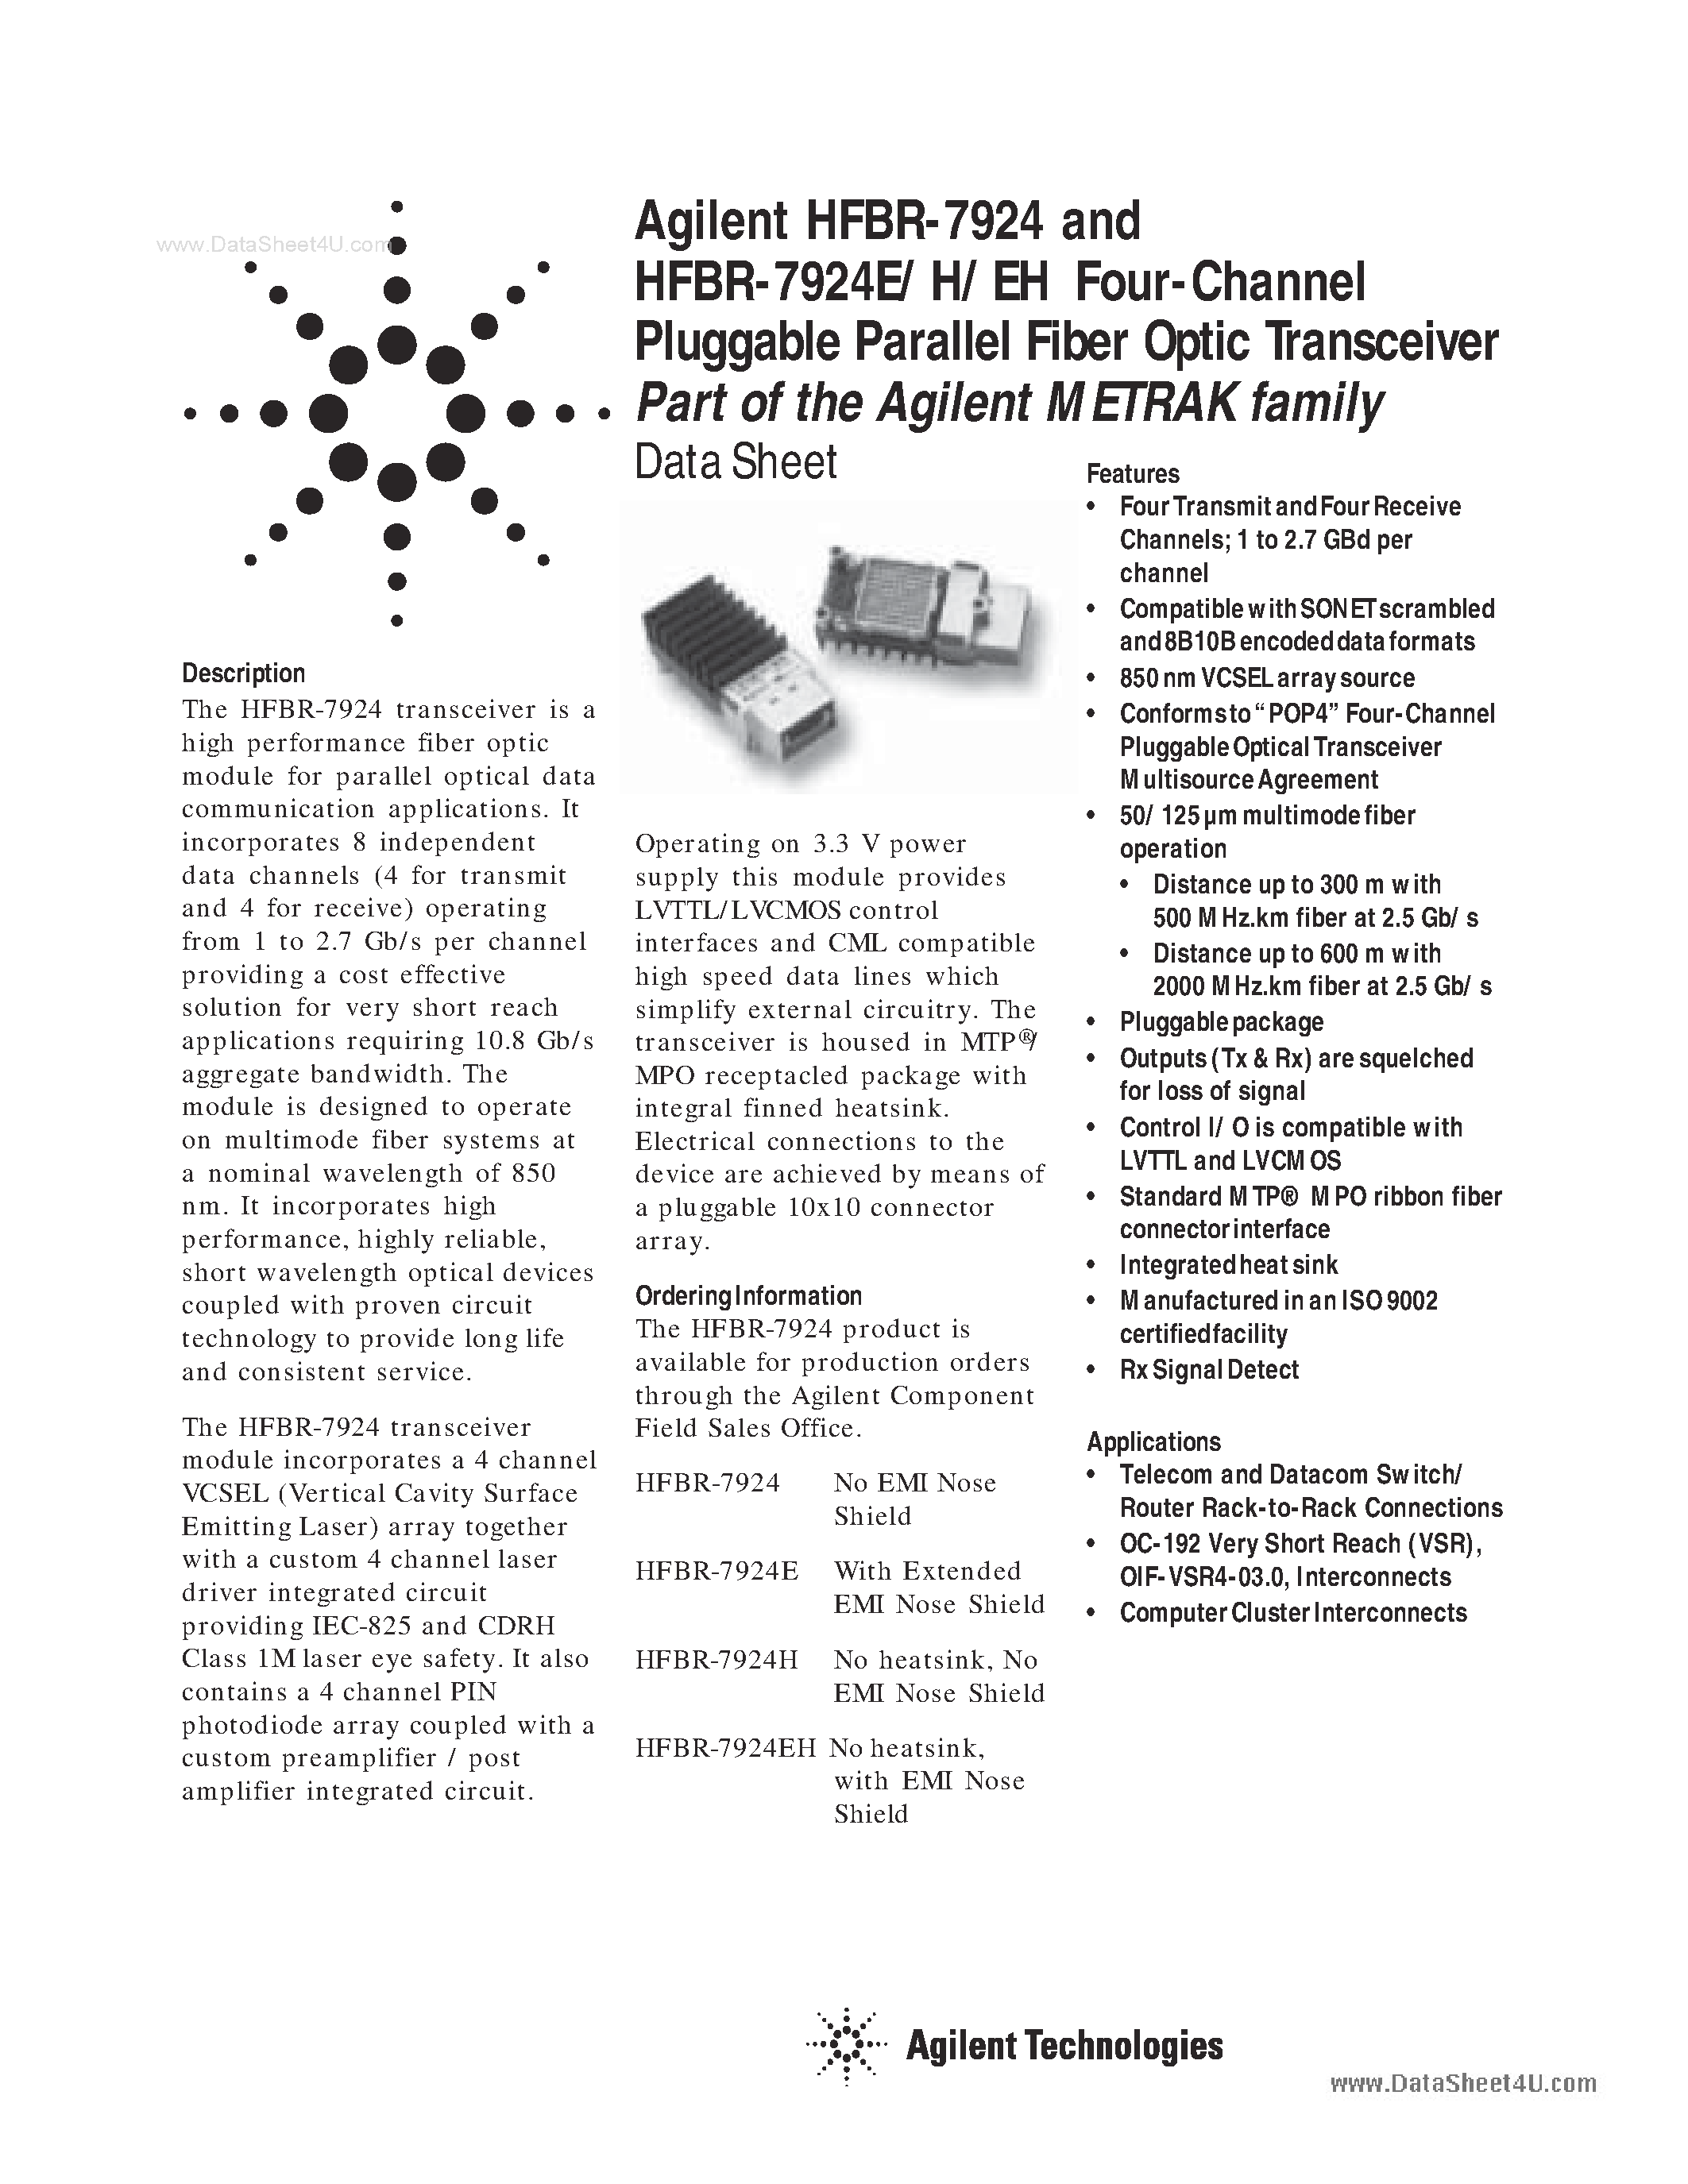 Datasheet HFBR-7924 - Four-Channel Pluggable Parallel Fiber Optic Transceiver Part of the Agilent METRAK family page 1